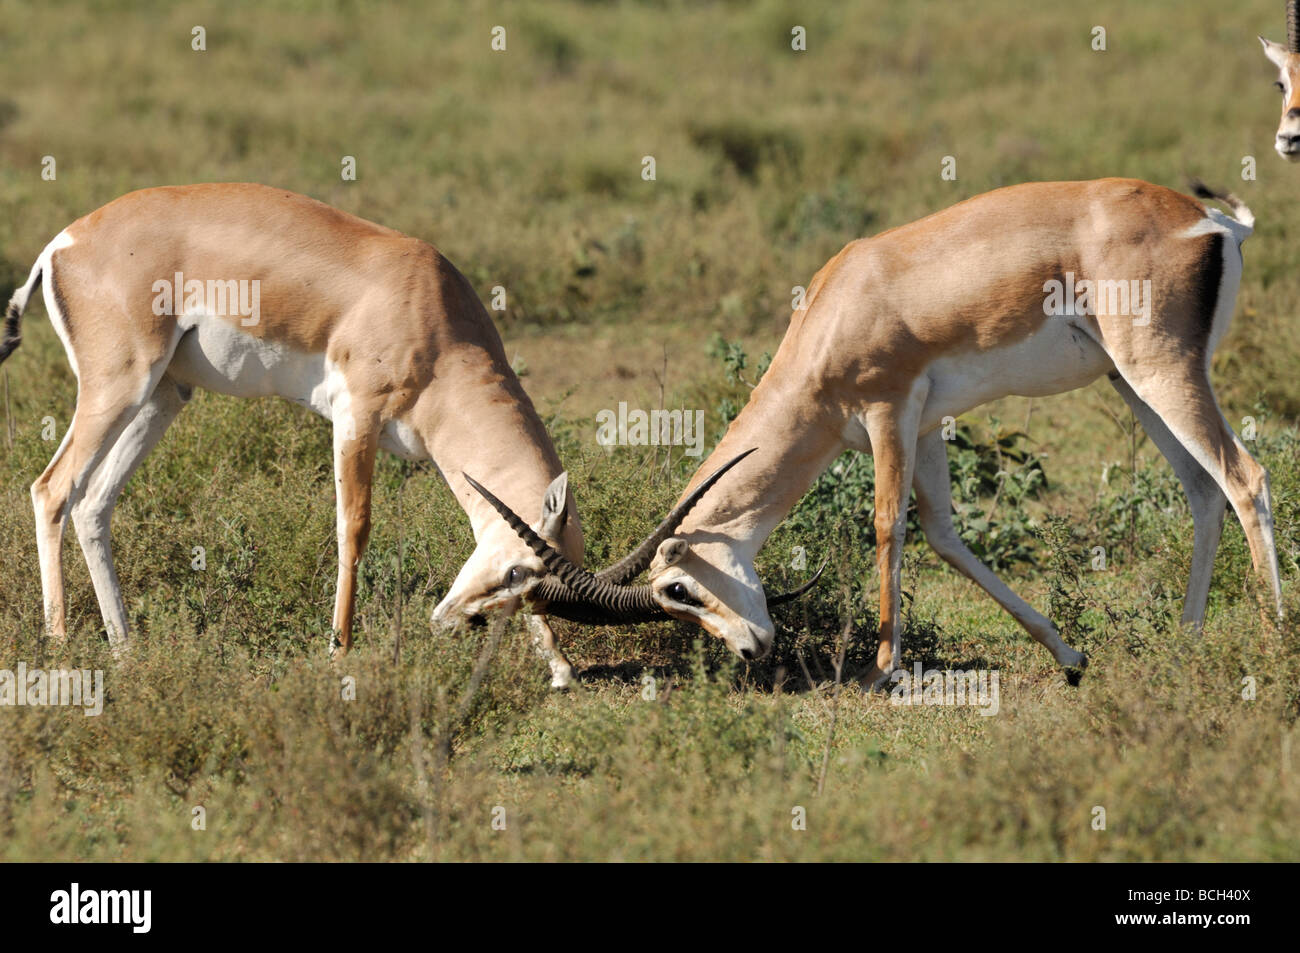 Stock photo of two grant's gazelle bucks sparring, Serengeti National Park, Tanzania, February 2009. Stock Photo